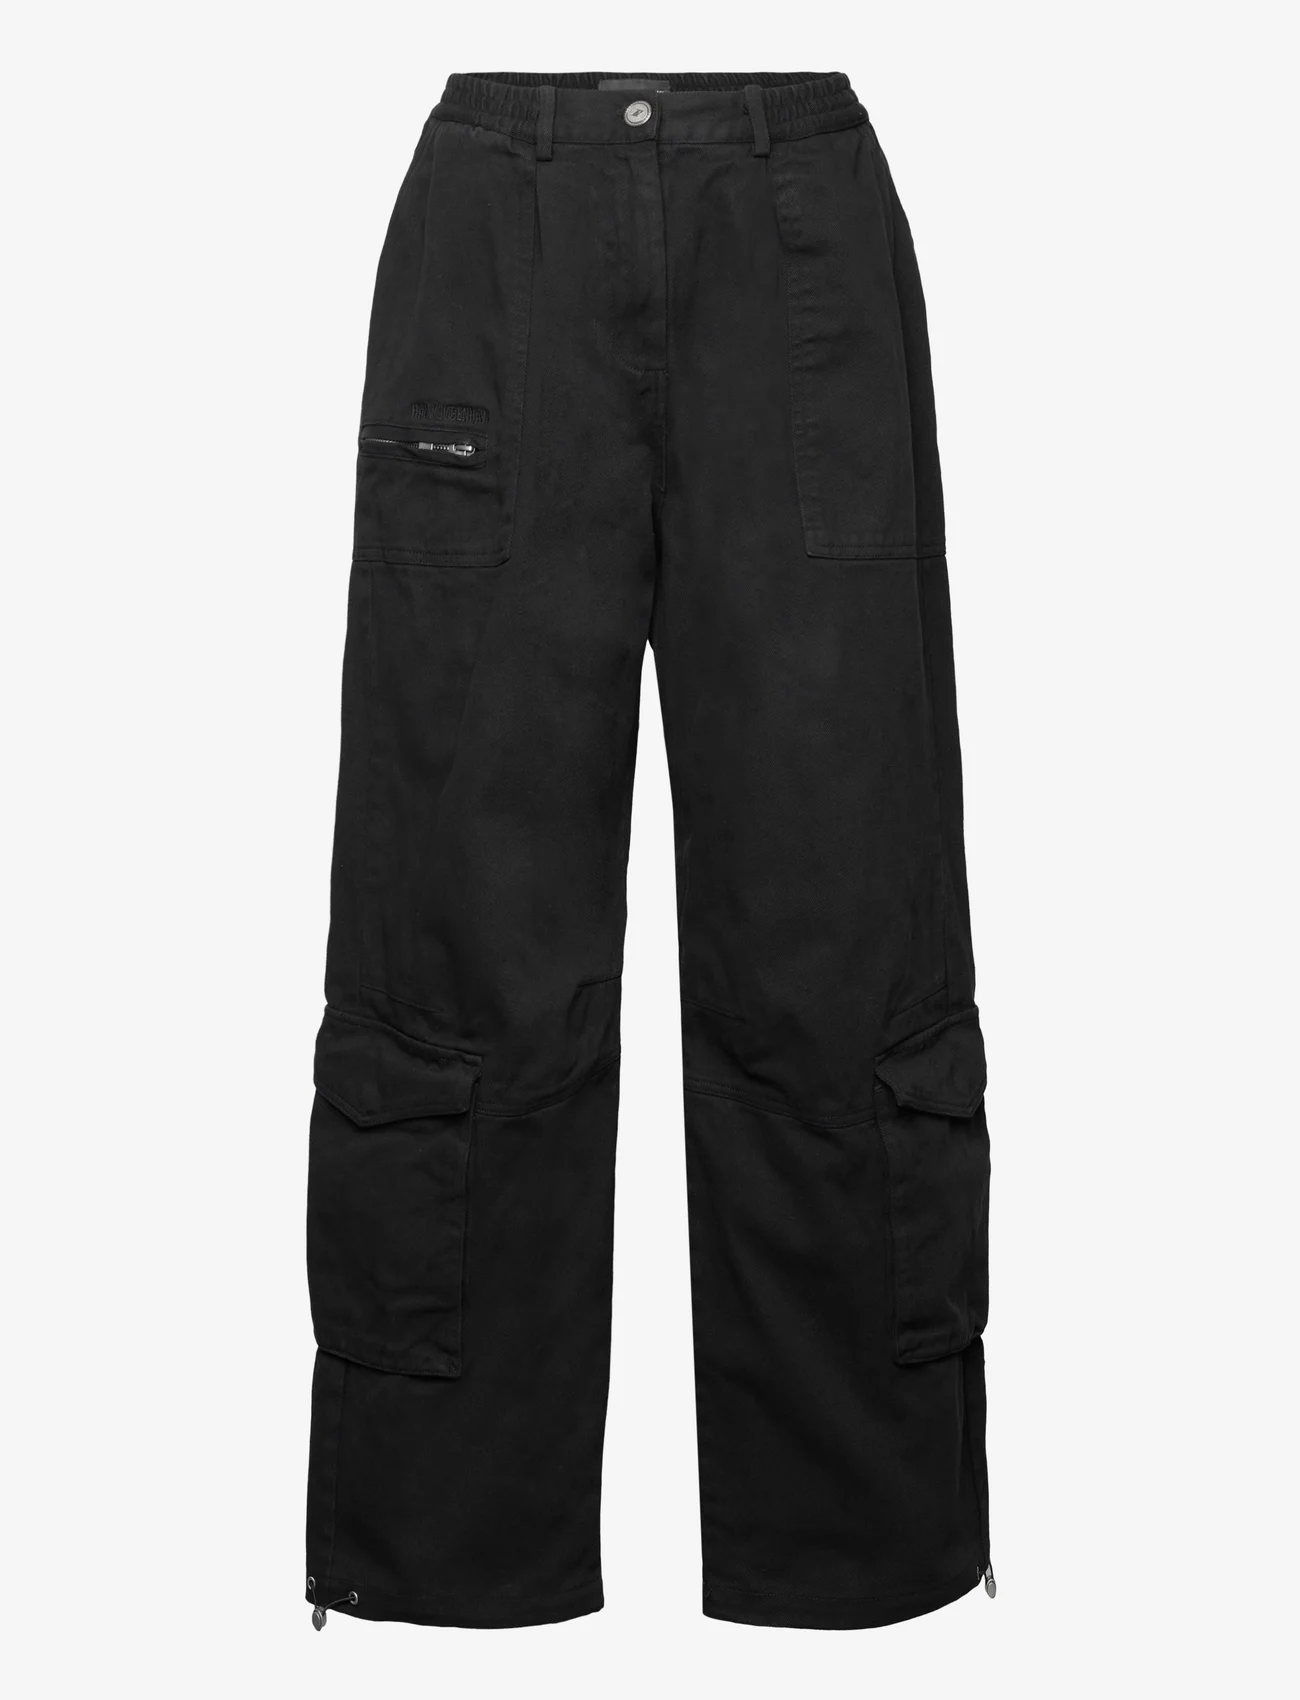 HAN Kjøbenhavn - Cotton Boxy Cargo Trousers - cargo pants - black - 0